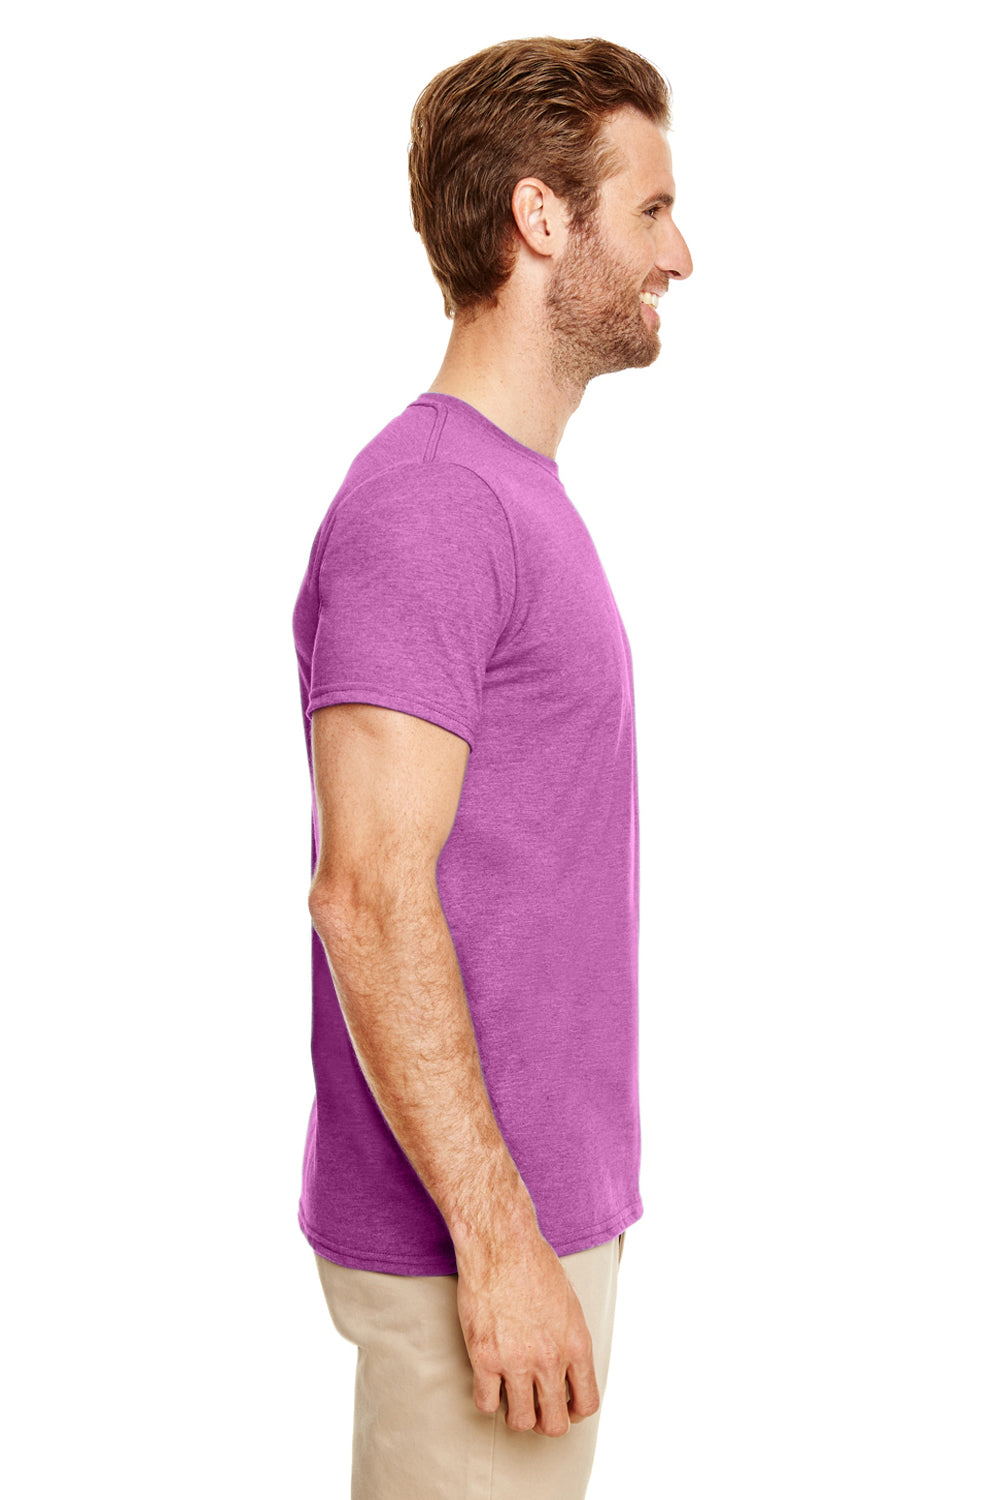 Gildan G640 Mens Softstyle Short Sleeve Crewneck T-Shirt Heather Orchid Purple Side